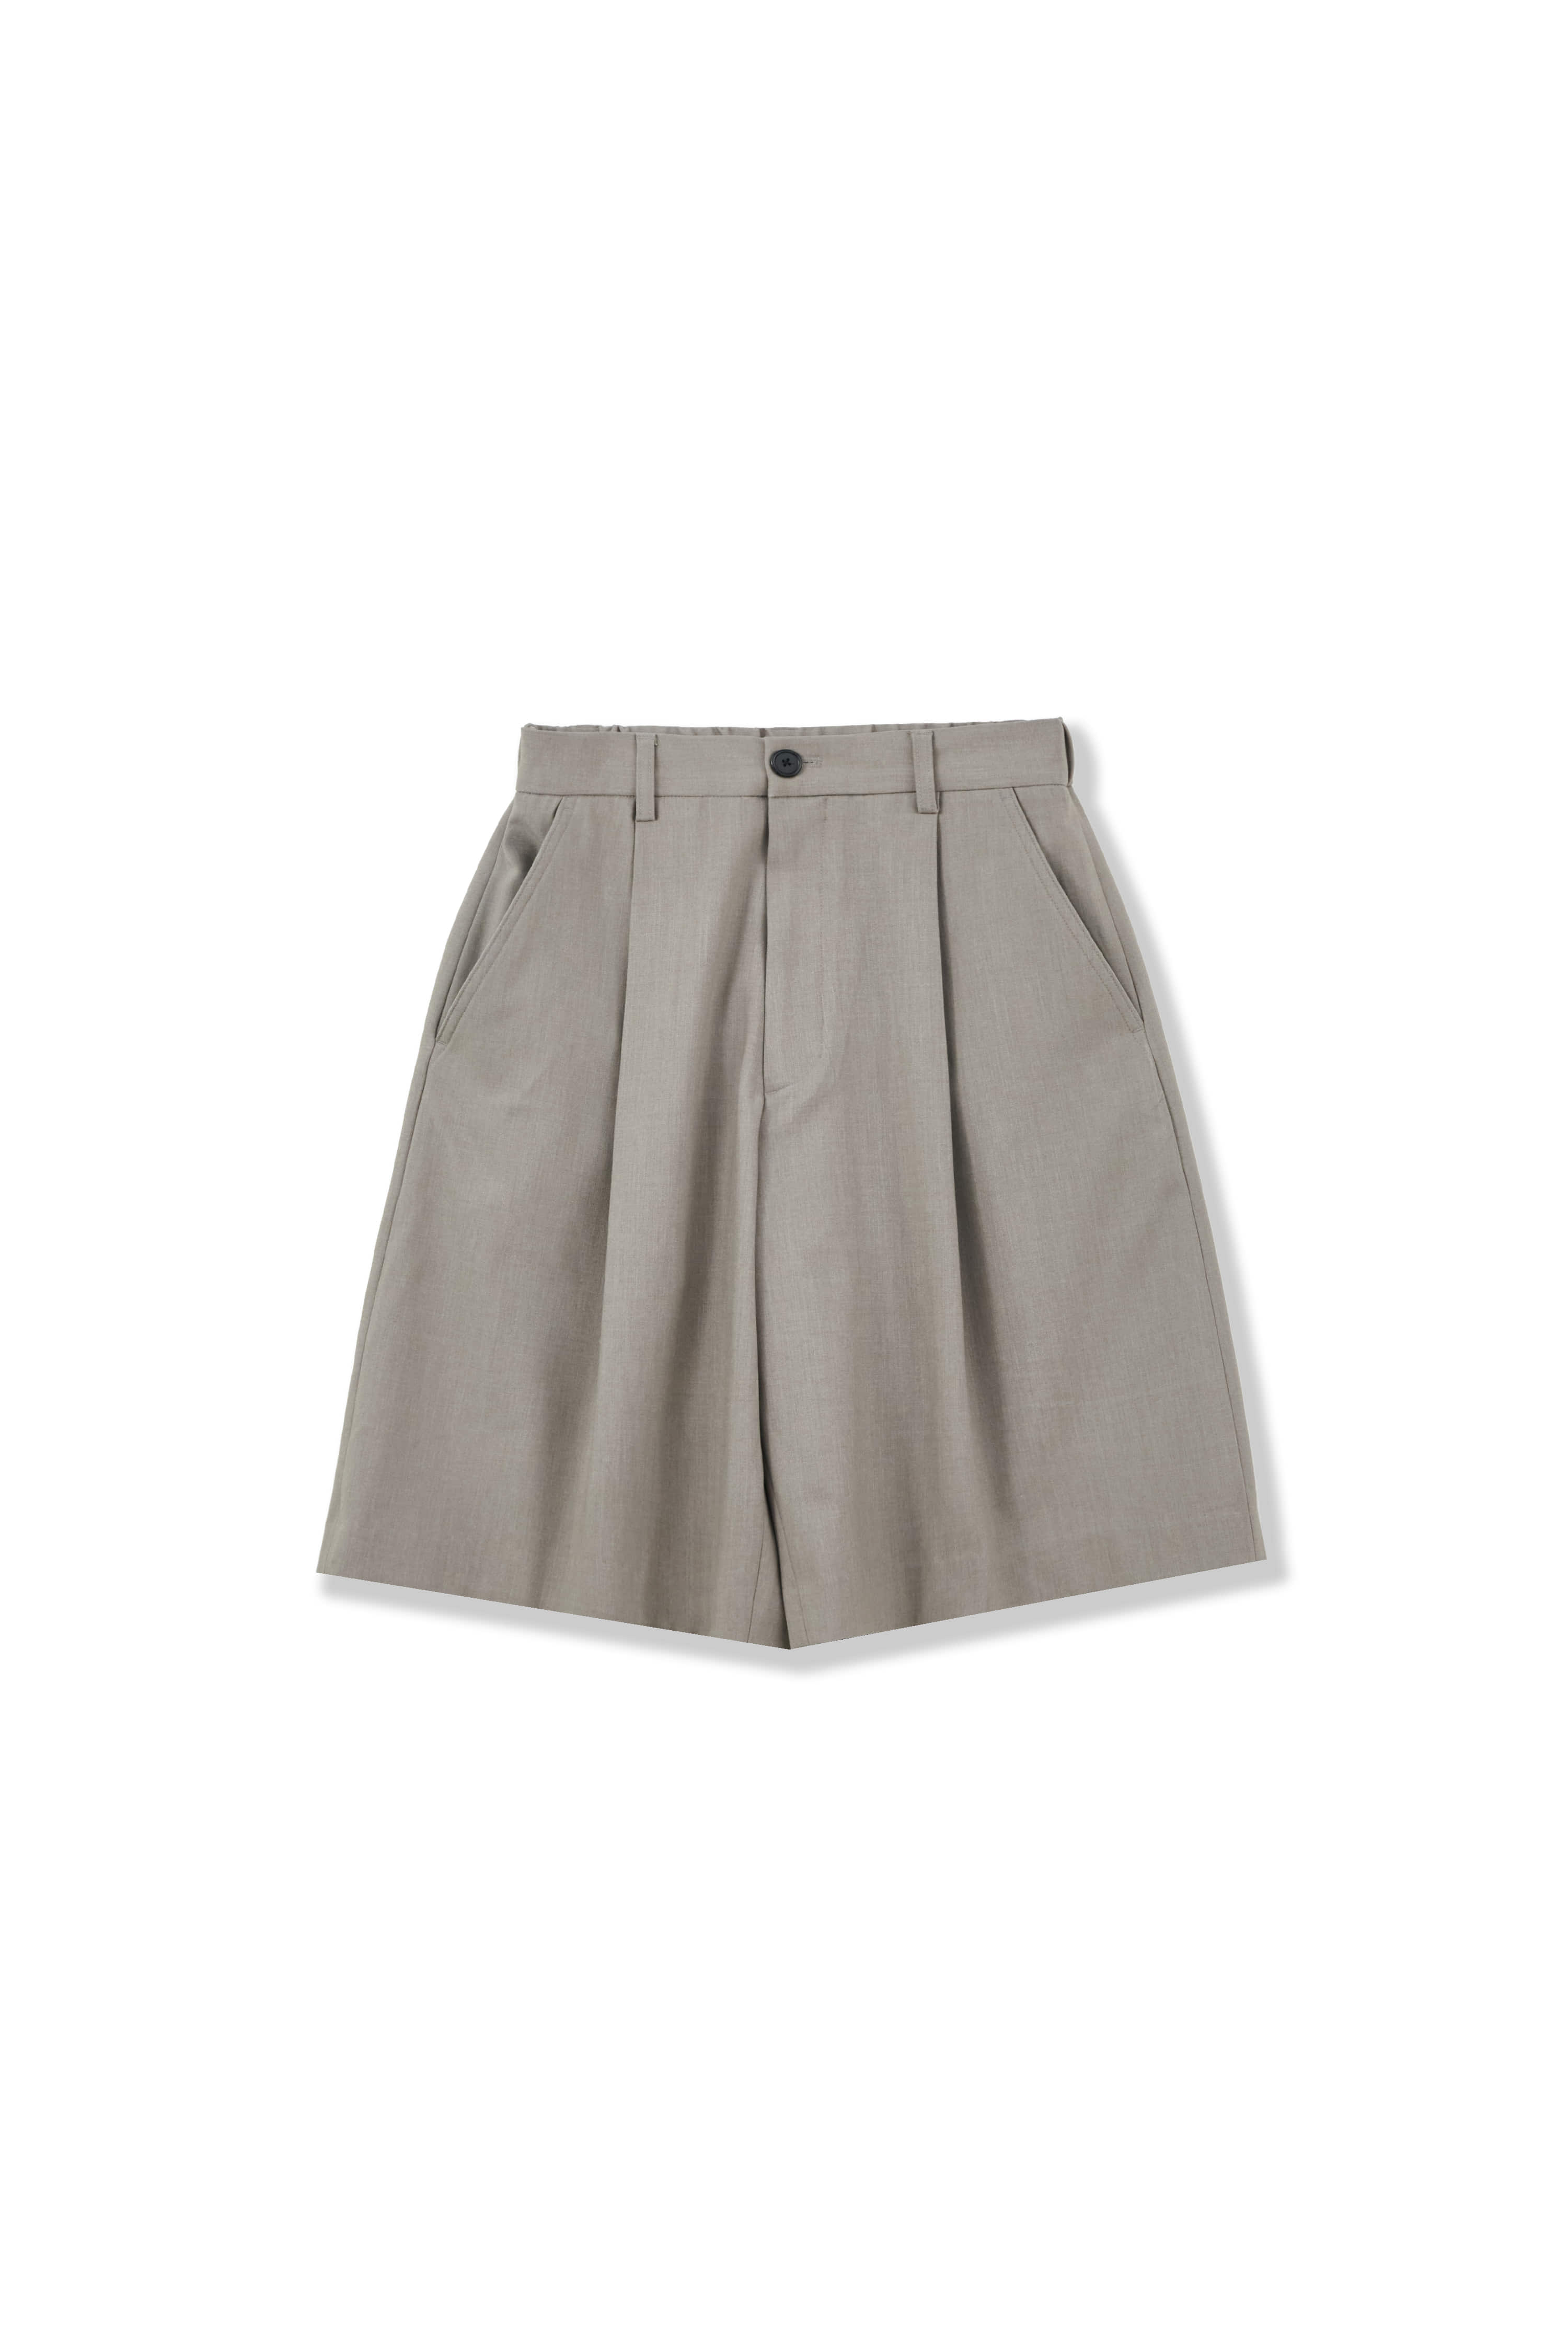 [TAKEASTREET exclusive] bermuda shorts_beige gray